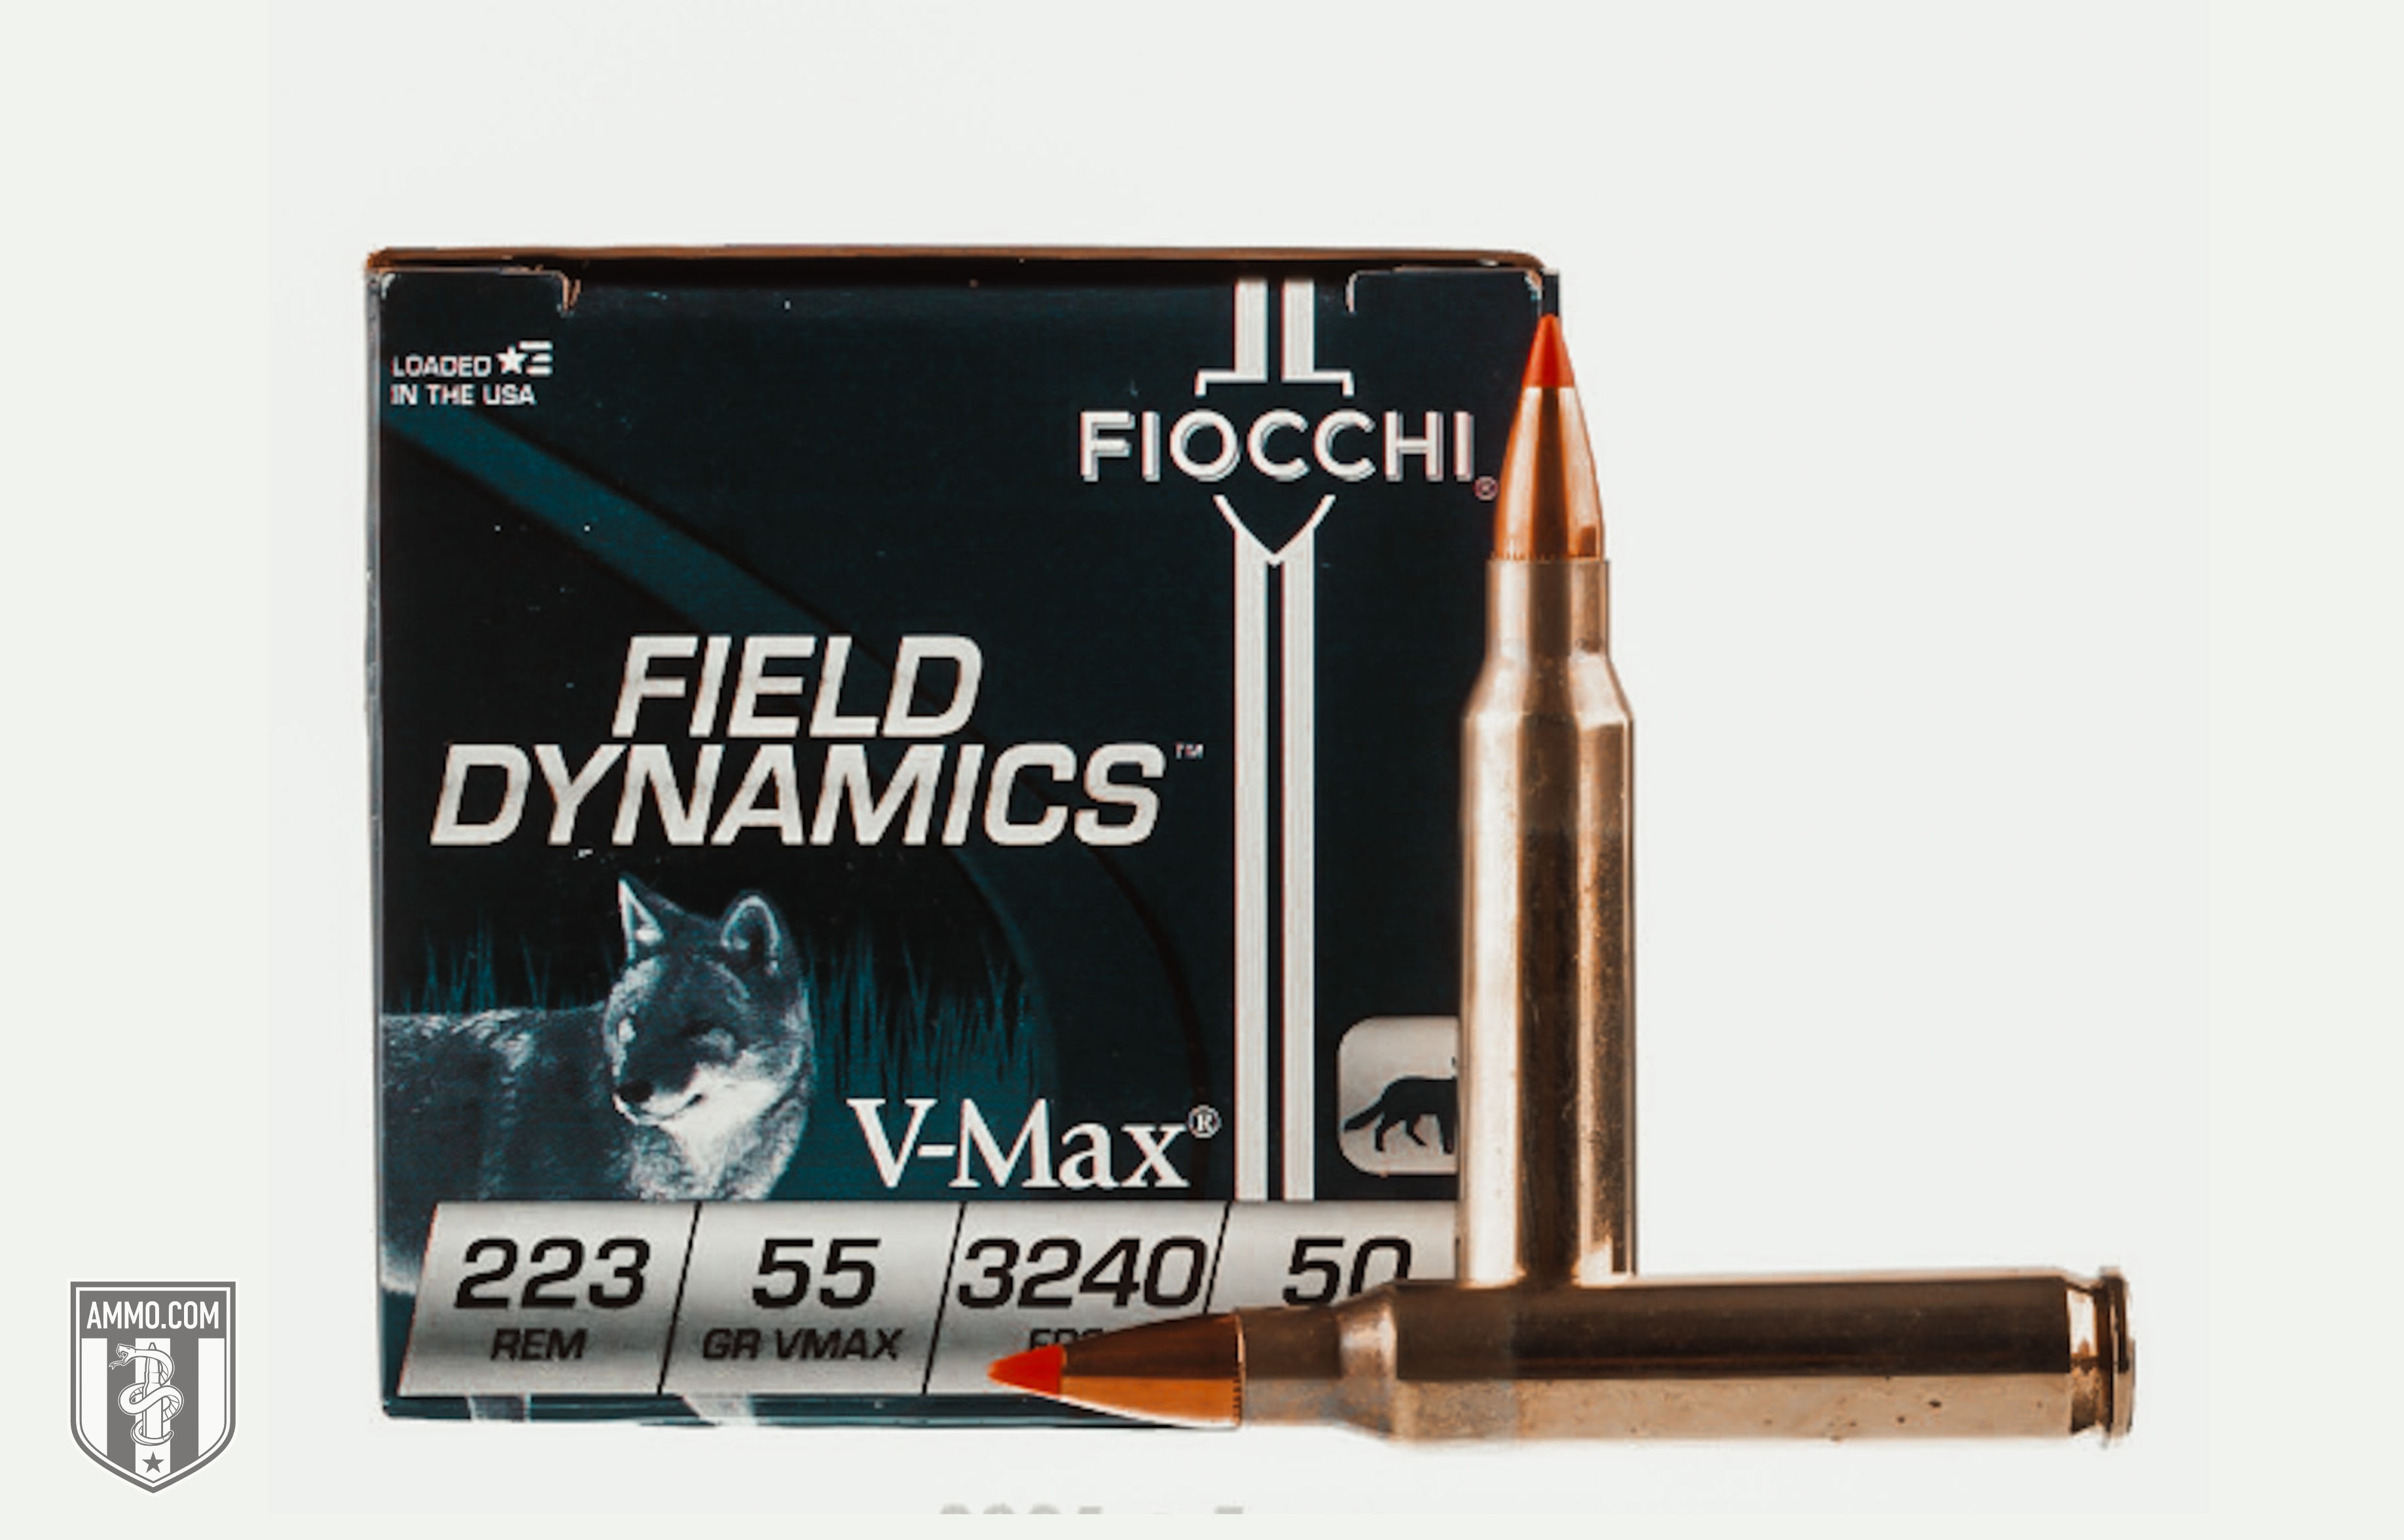 Fiocchi Field Dynamics 223 Rem ammo for sale